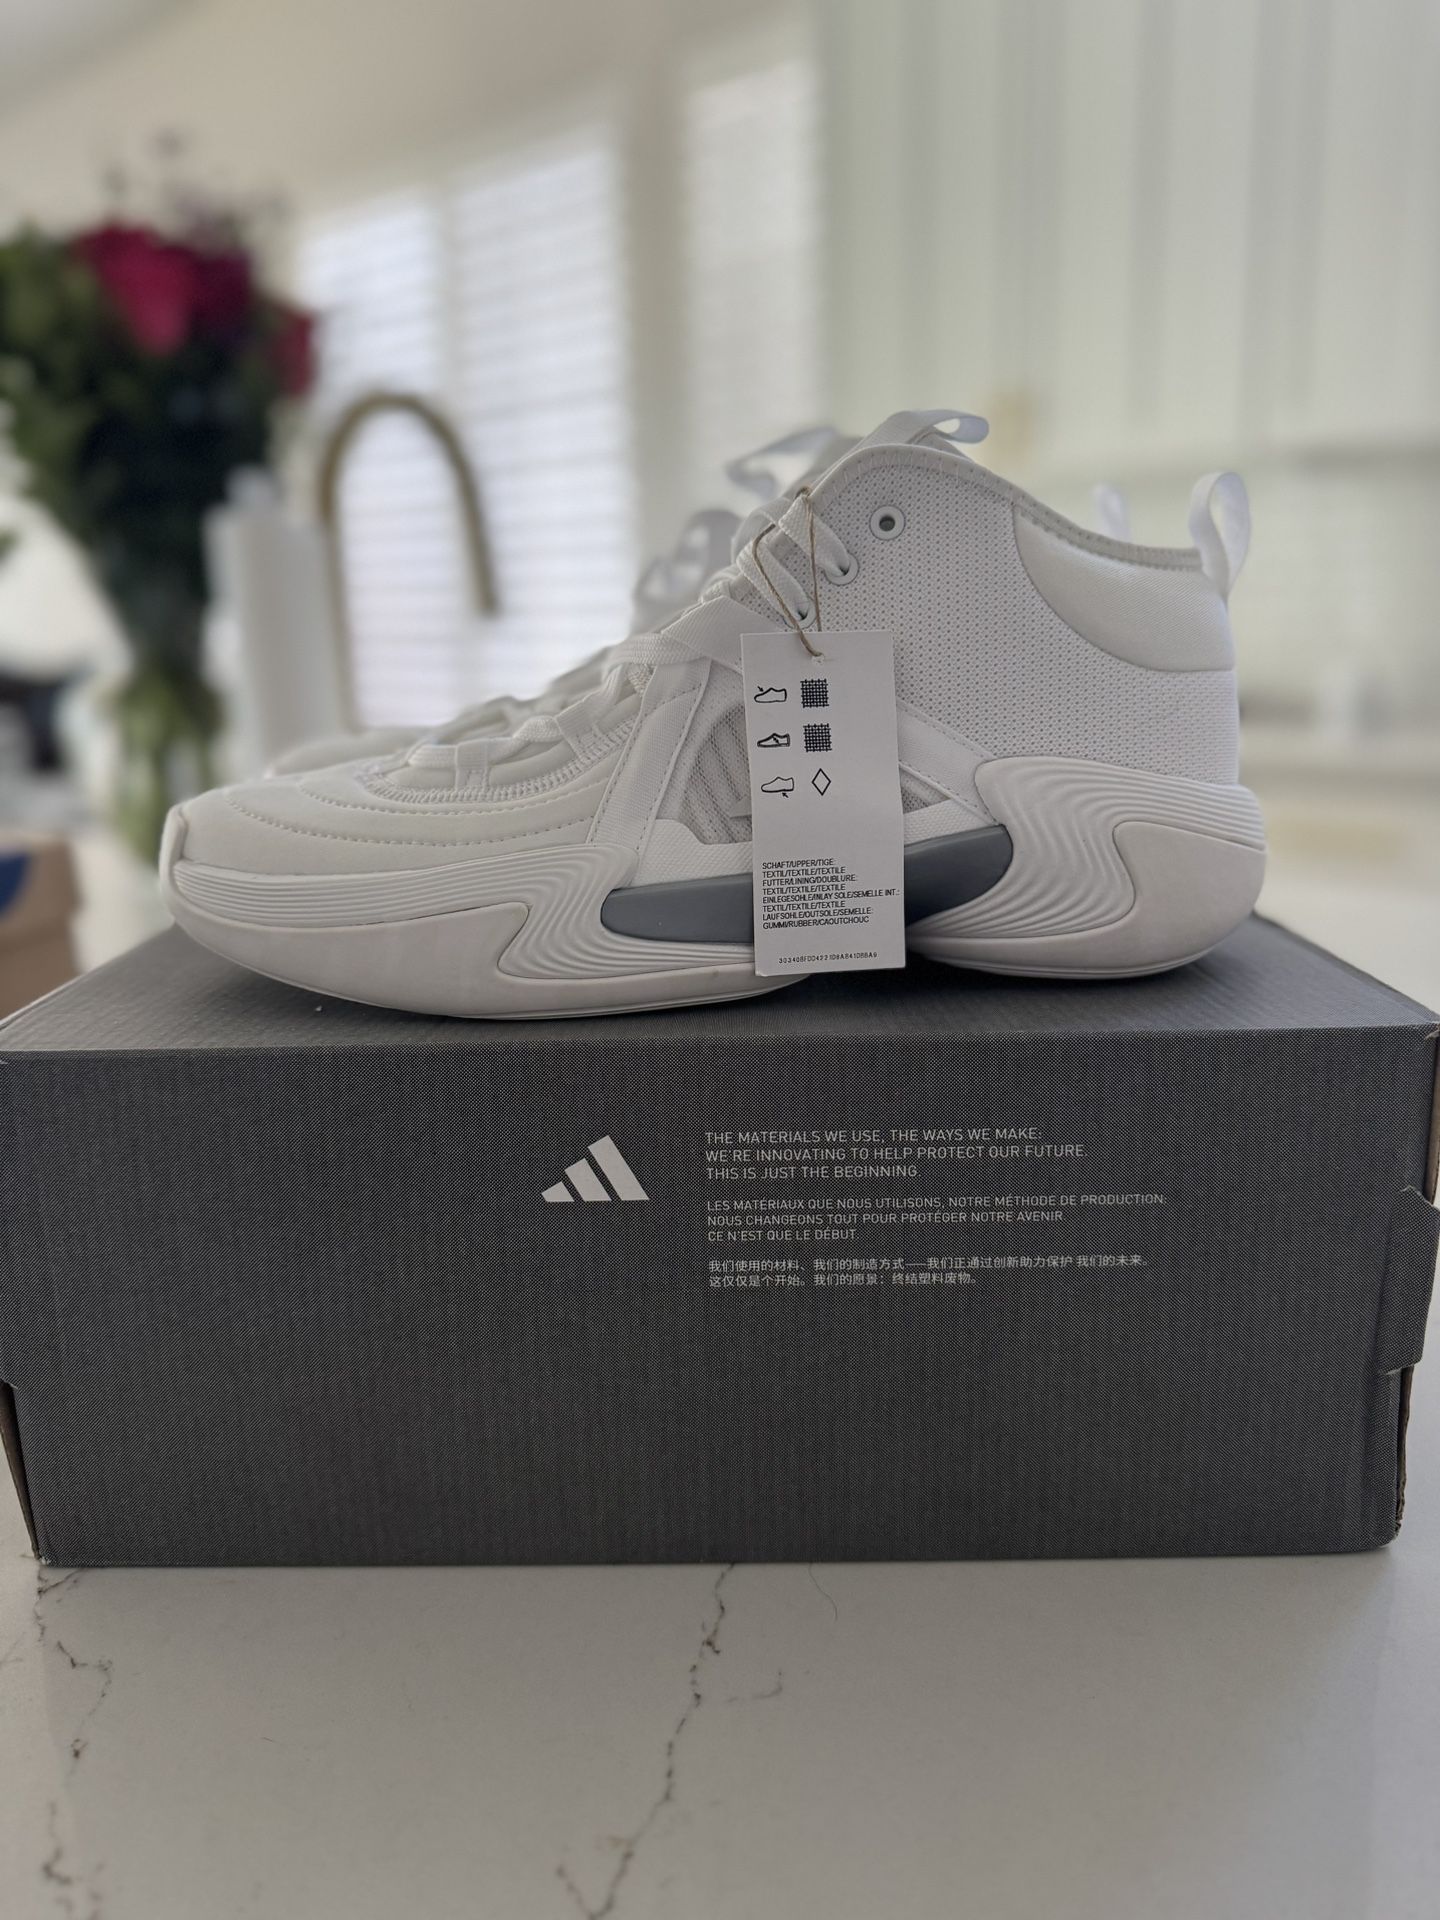 Adidas Basketball Shoes - Women BRAND NEW - Size 10